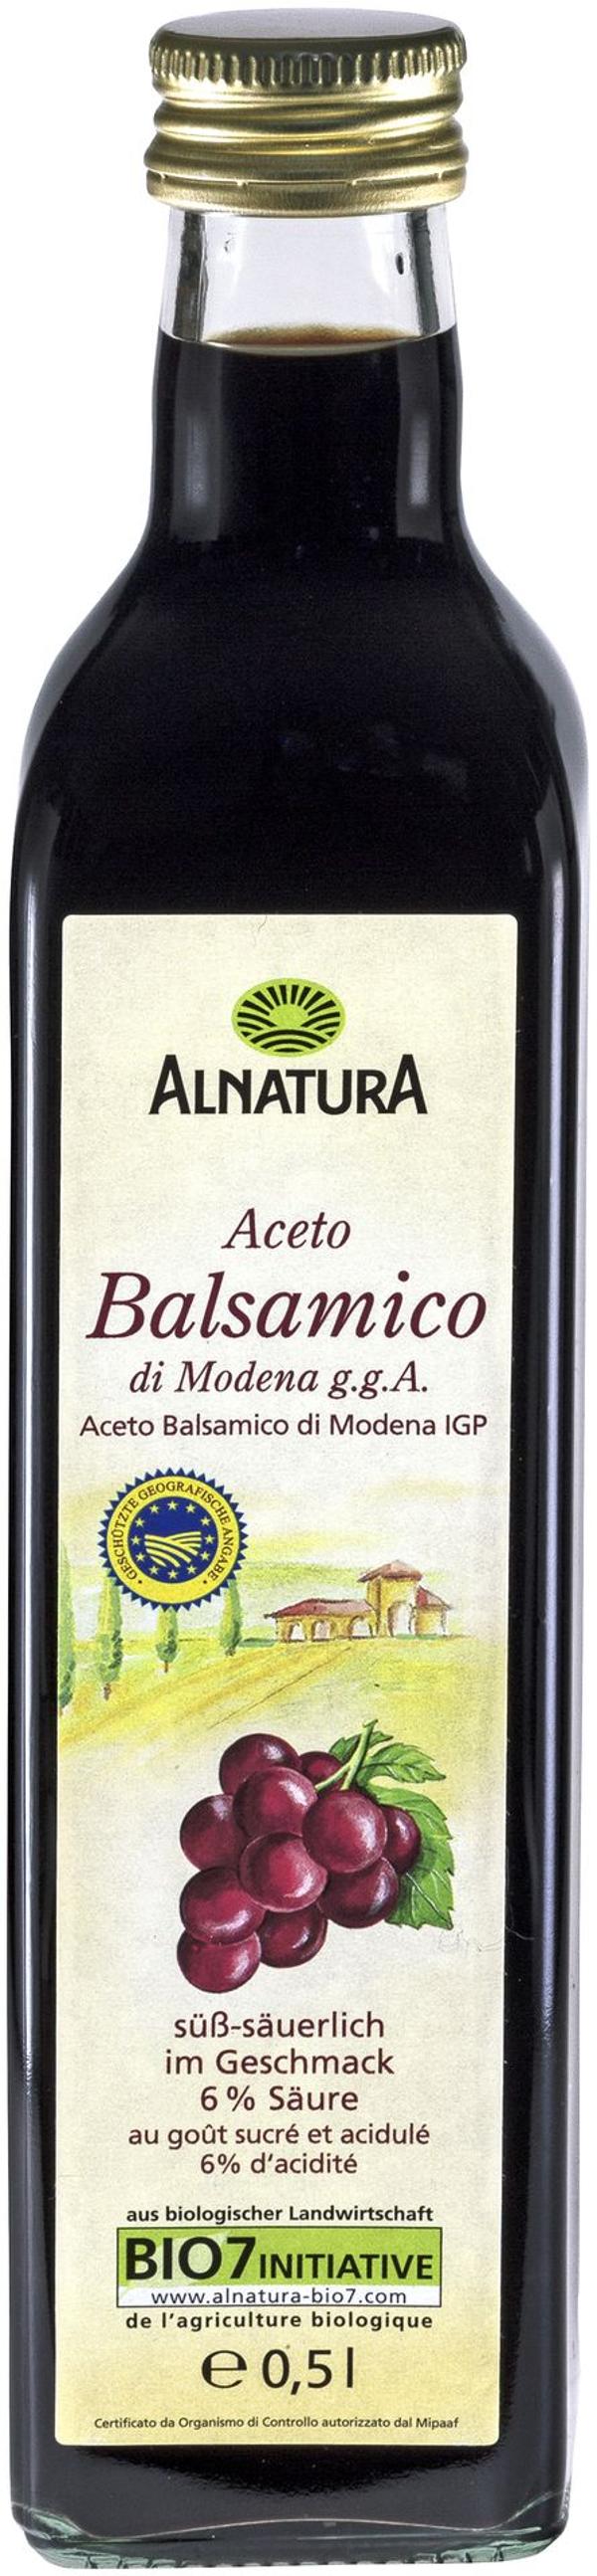 Produktfoto zu Aceto Balsamico 500 ml Alnatura